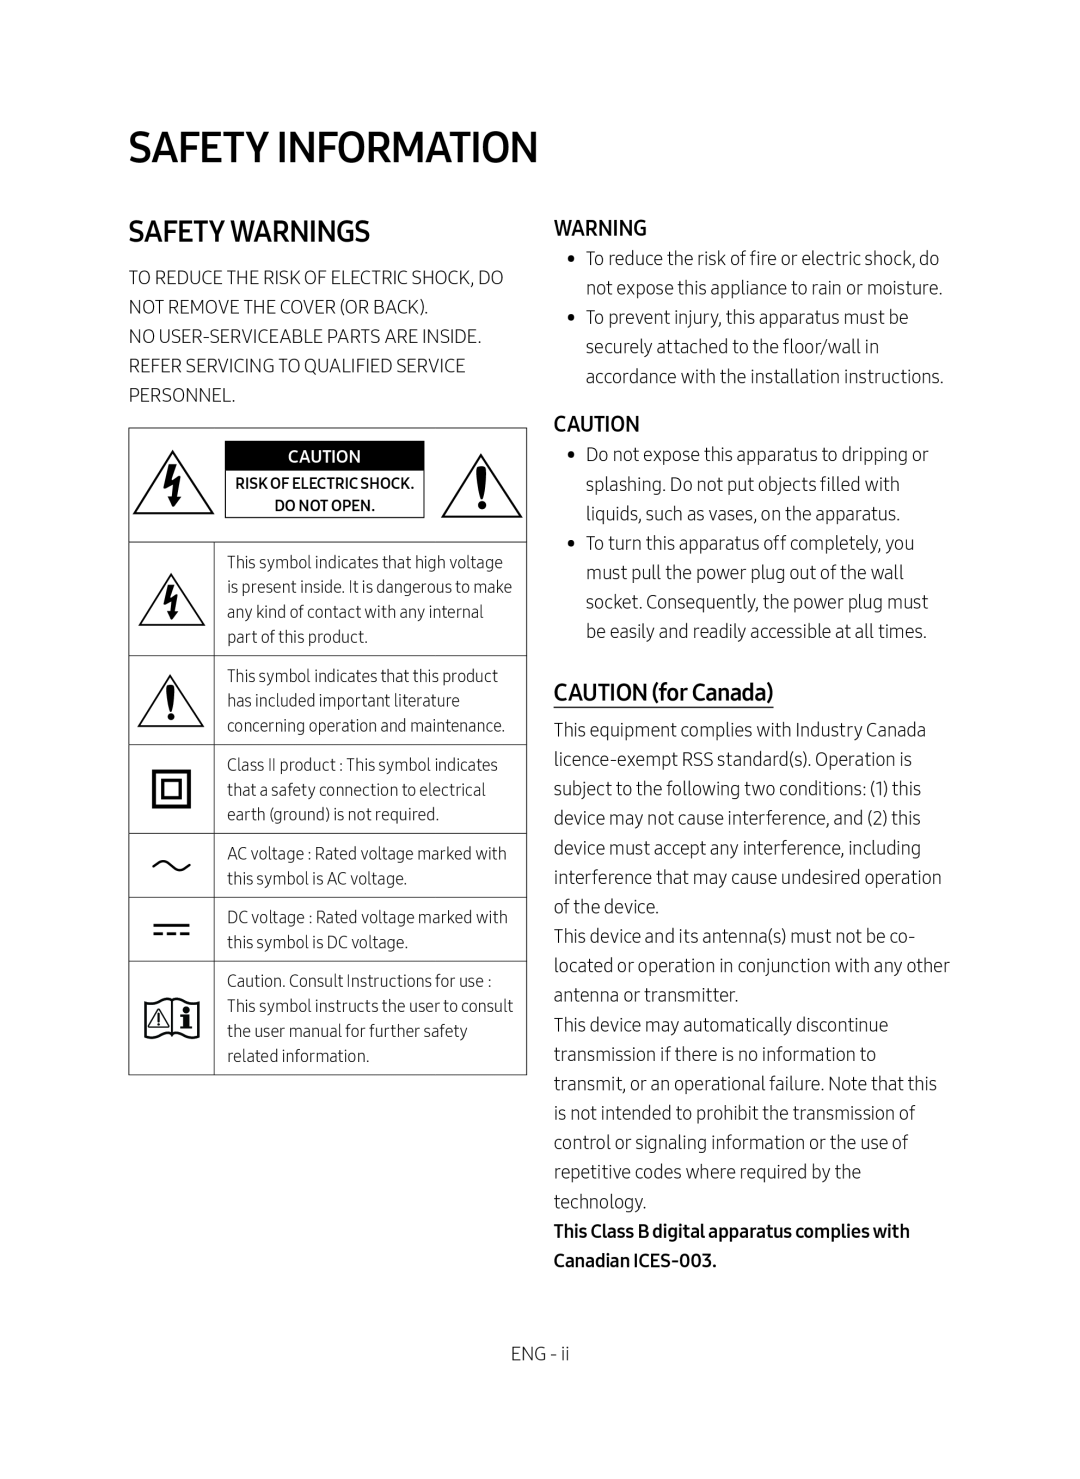 WARNING Standard HW-MS750